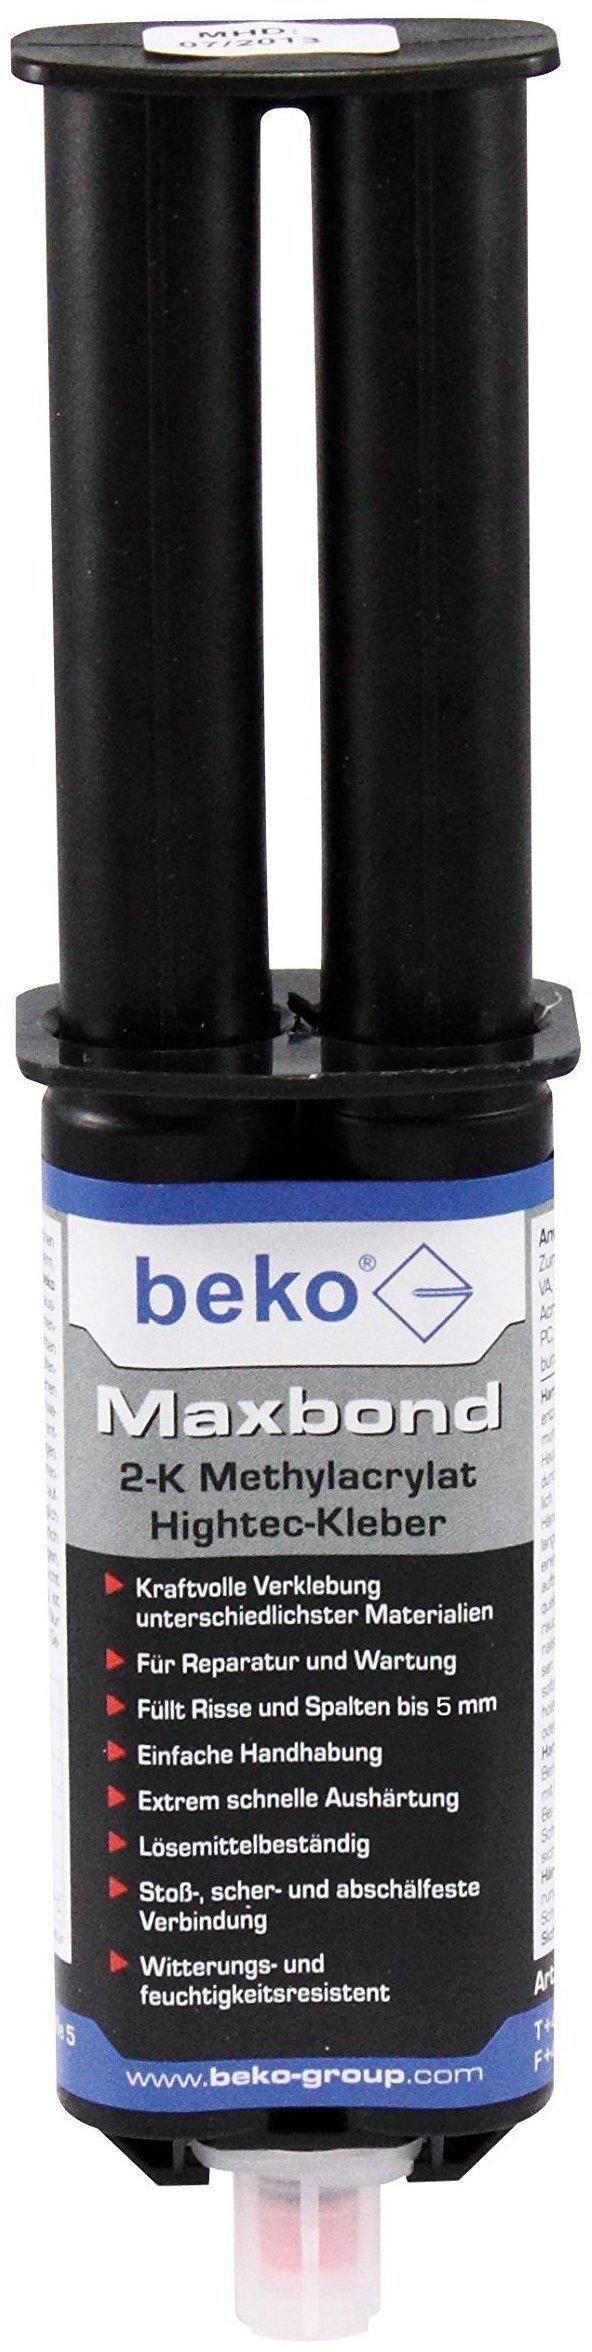 Beko Maxbond Speed 2-K Hightec Kleber 28g incl Zwangsmischer